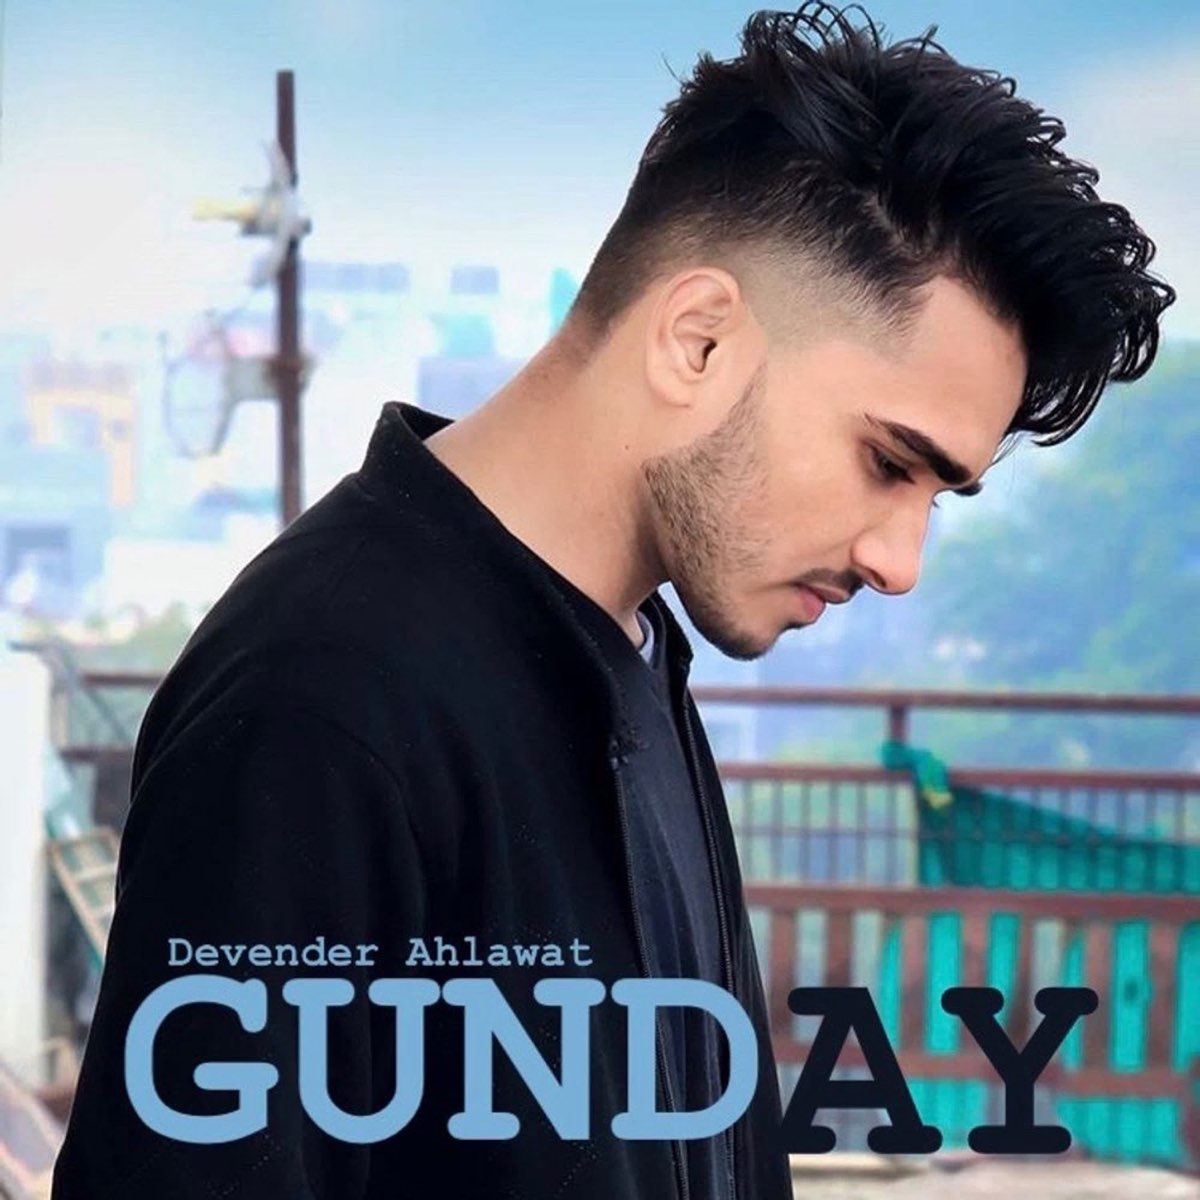 Gunday - Single by Devender Ahlawat on Apple Music